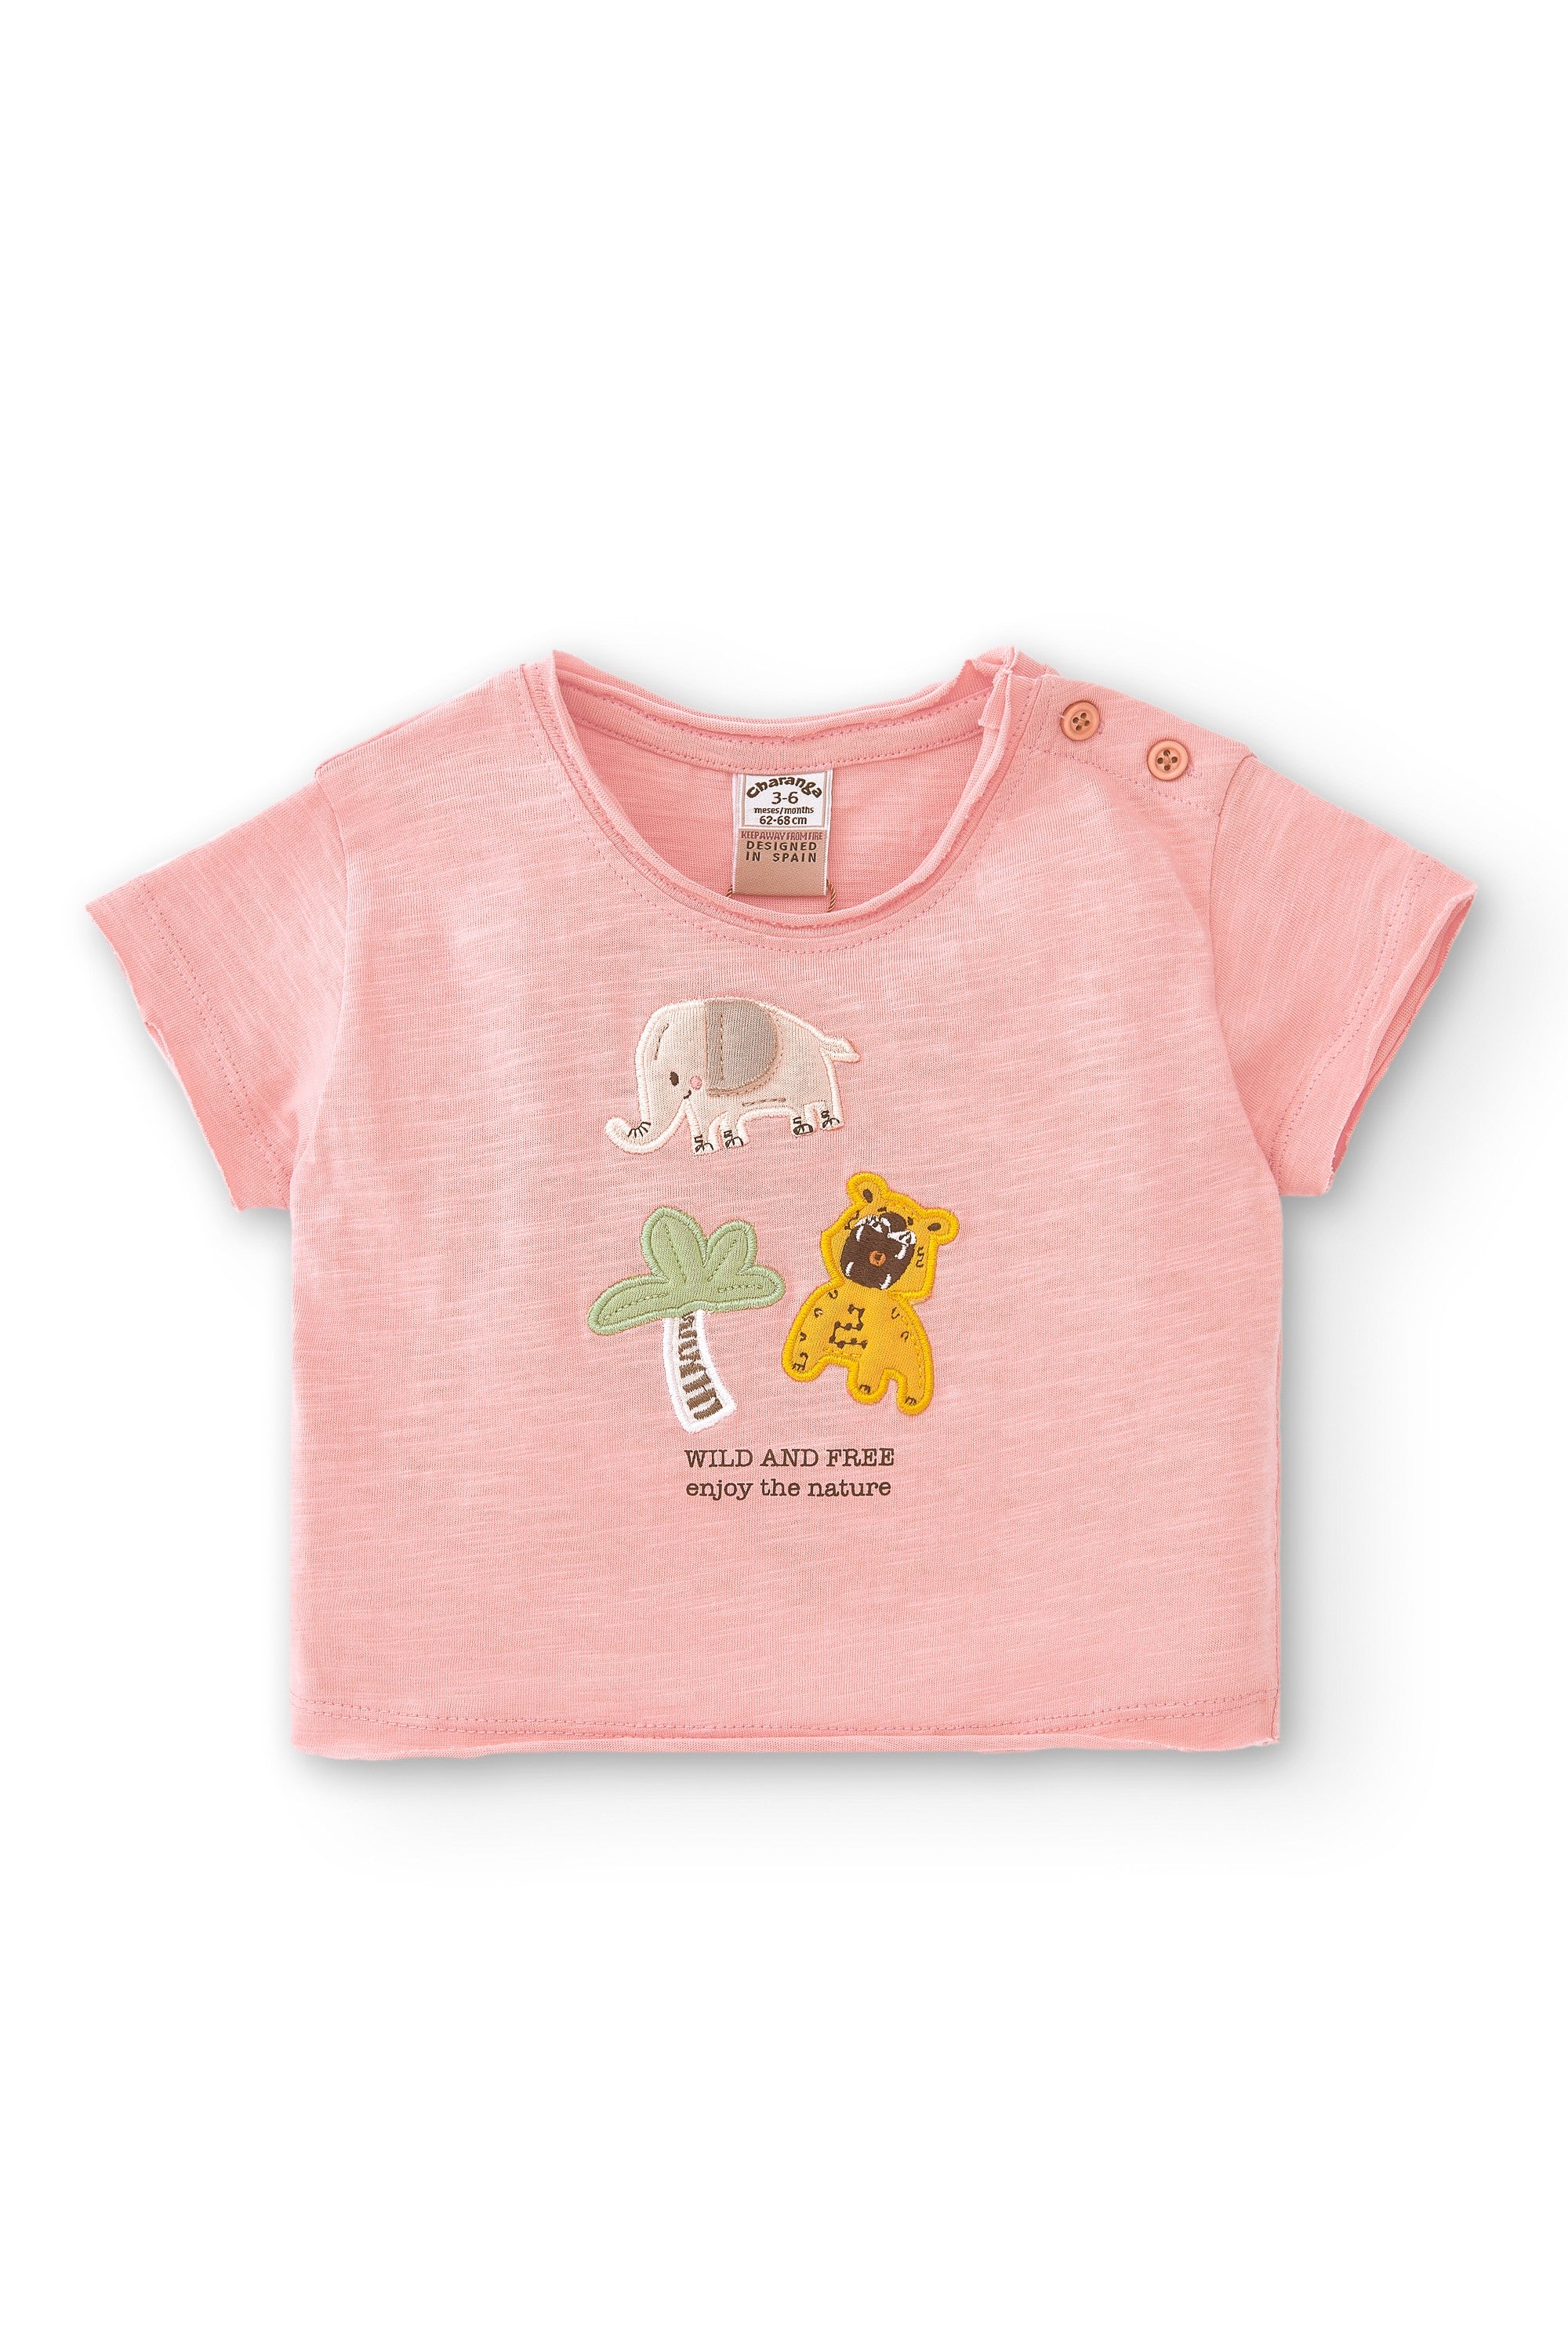 Camiseta de recién nacido naranja VERANO/Outlet